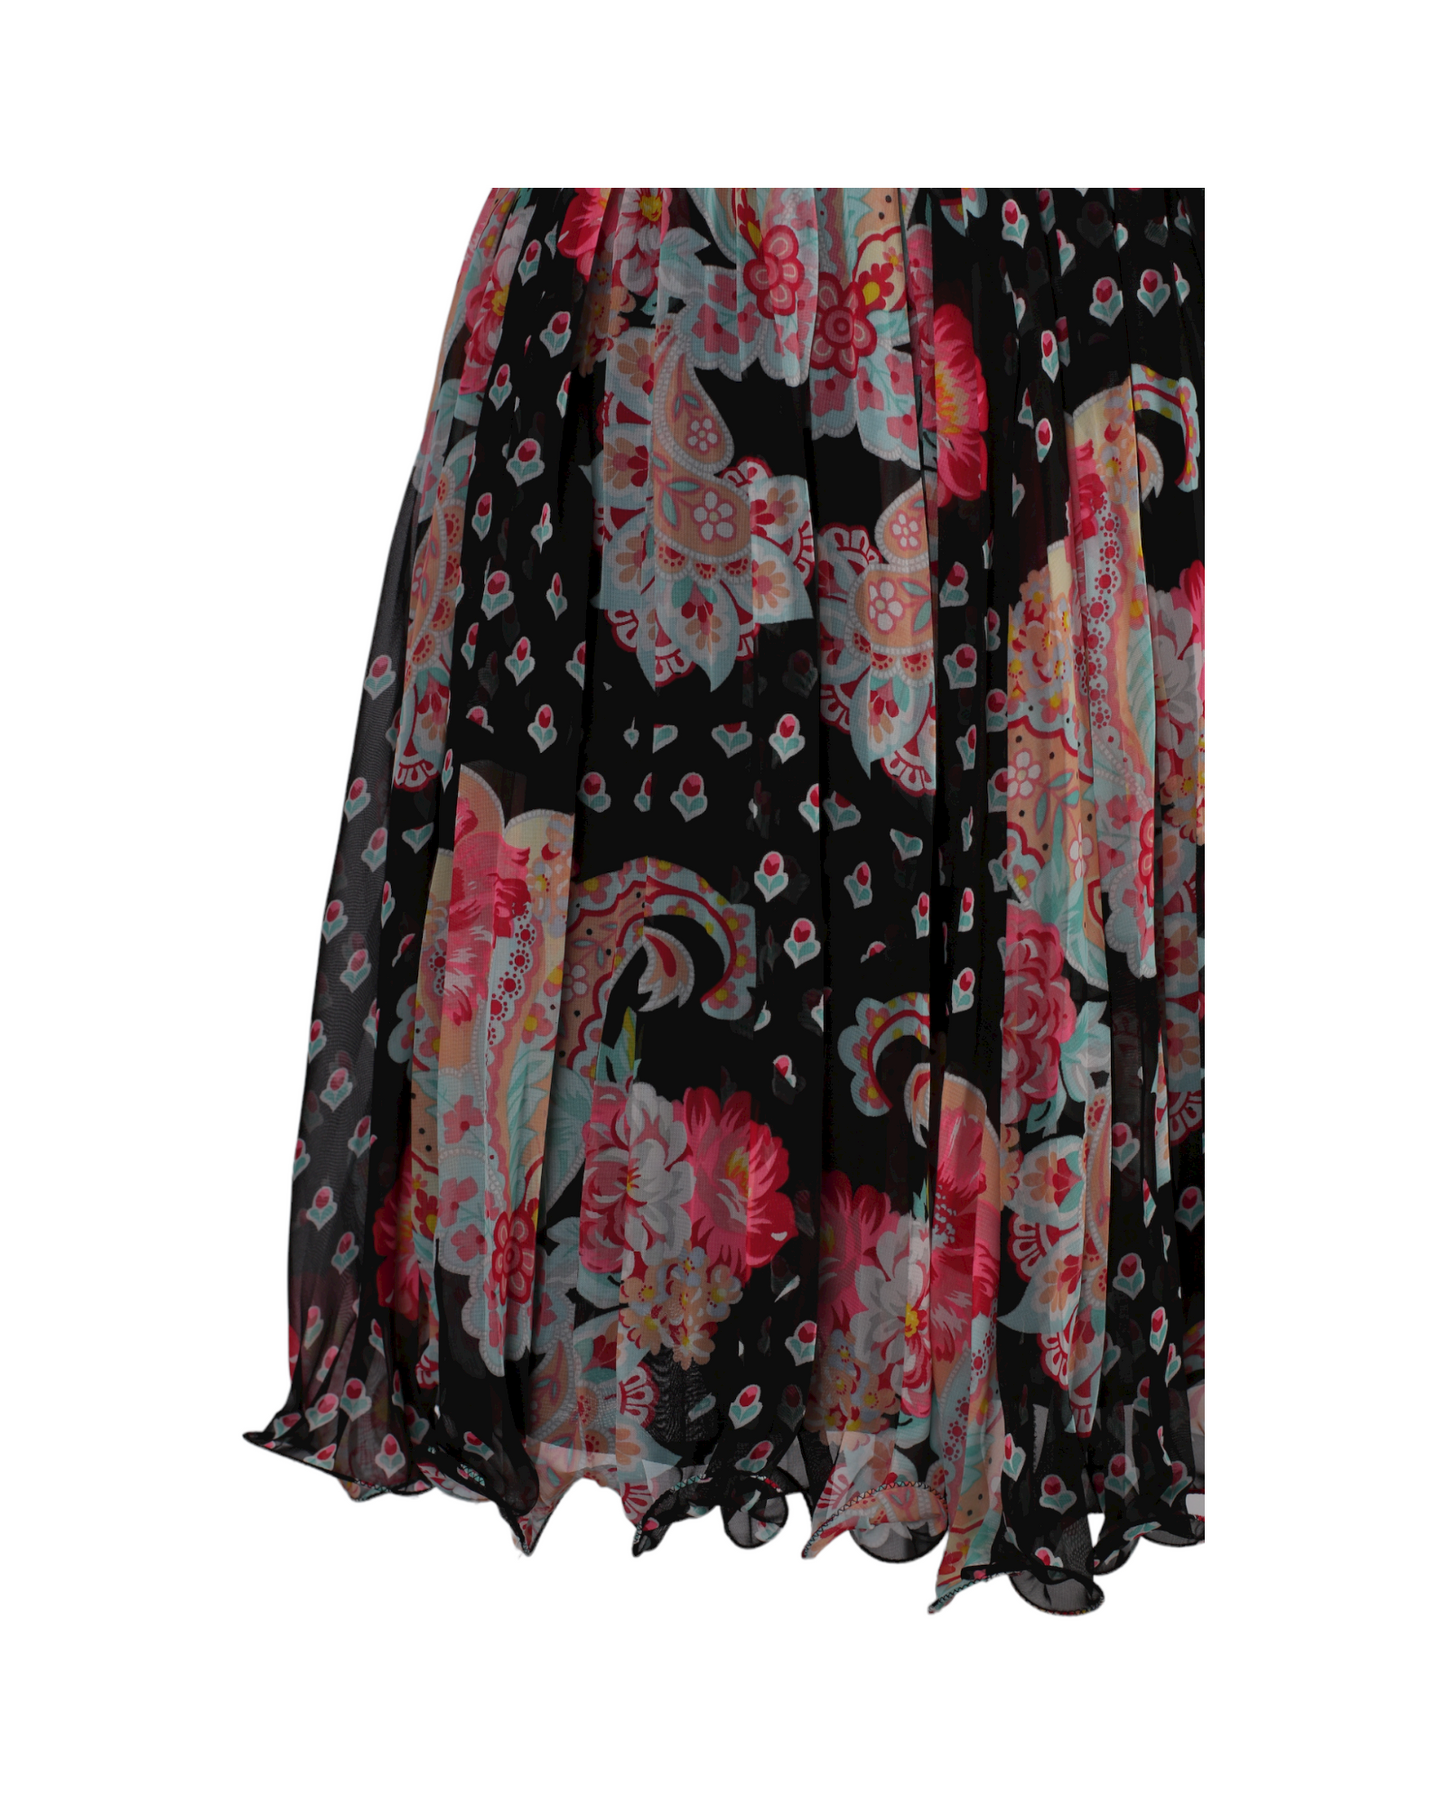 Manoush printed dress